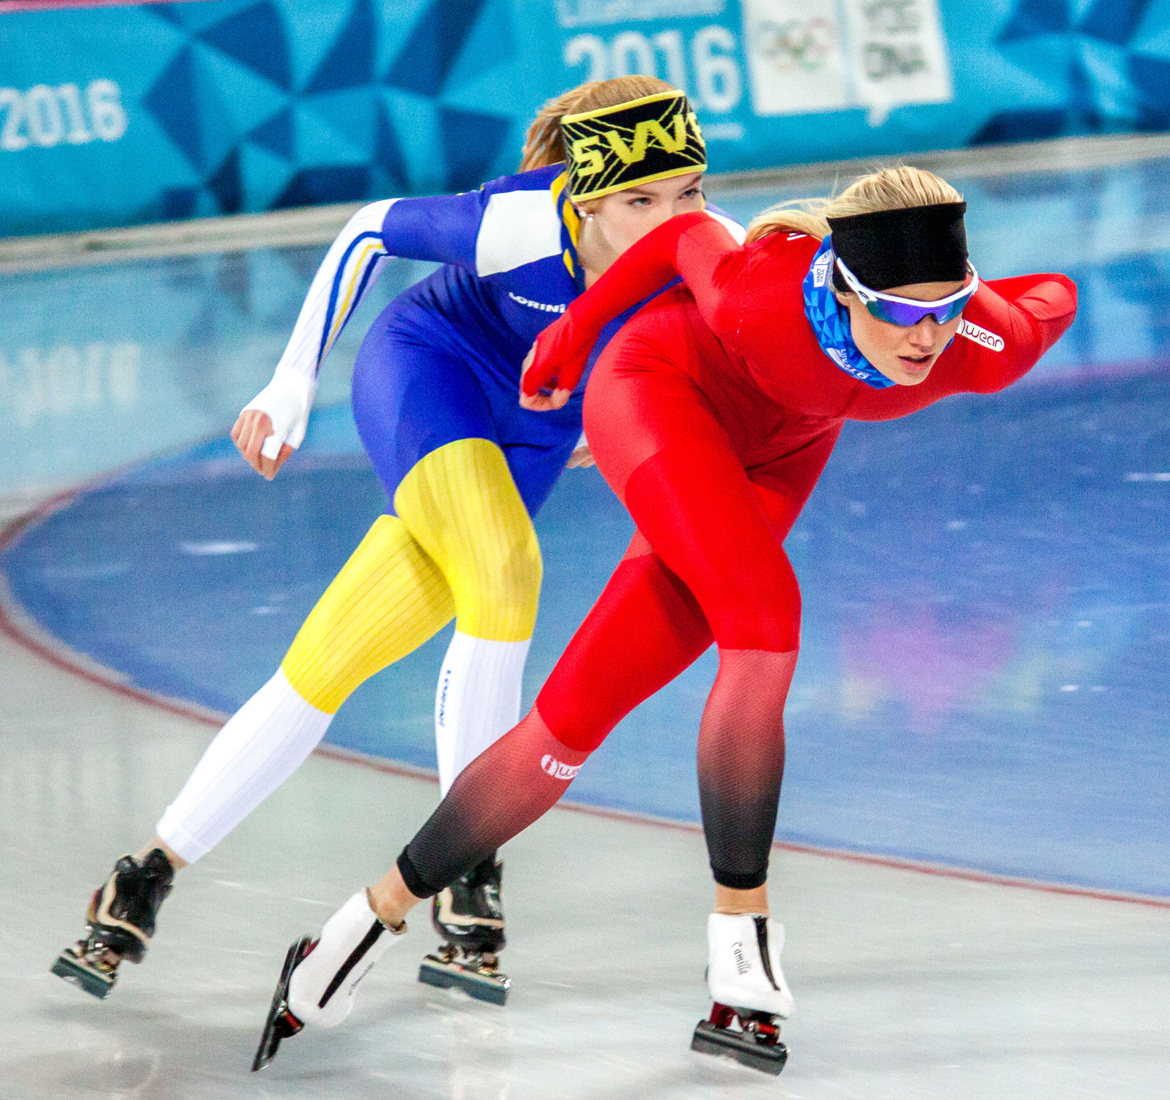 Erika Lindgren jagar träningskompisen Camilla Wangen Evjevik. Foto: Jed Leicester, Lillehammer 2016